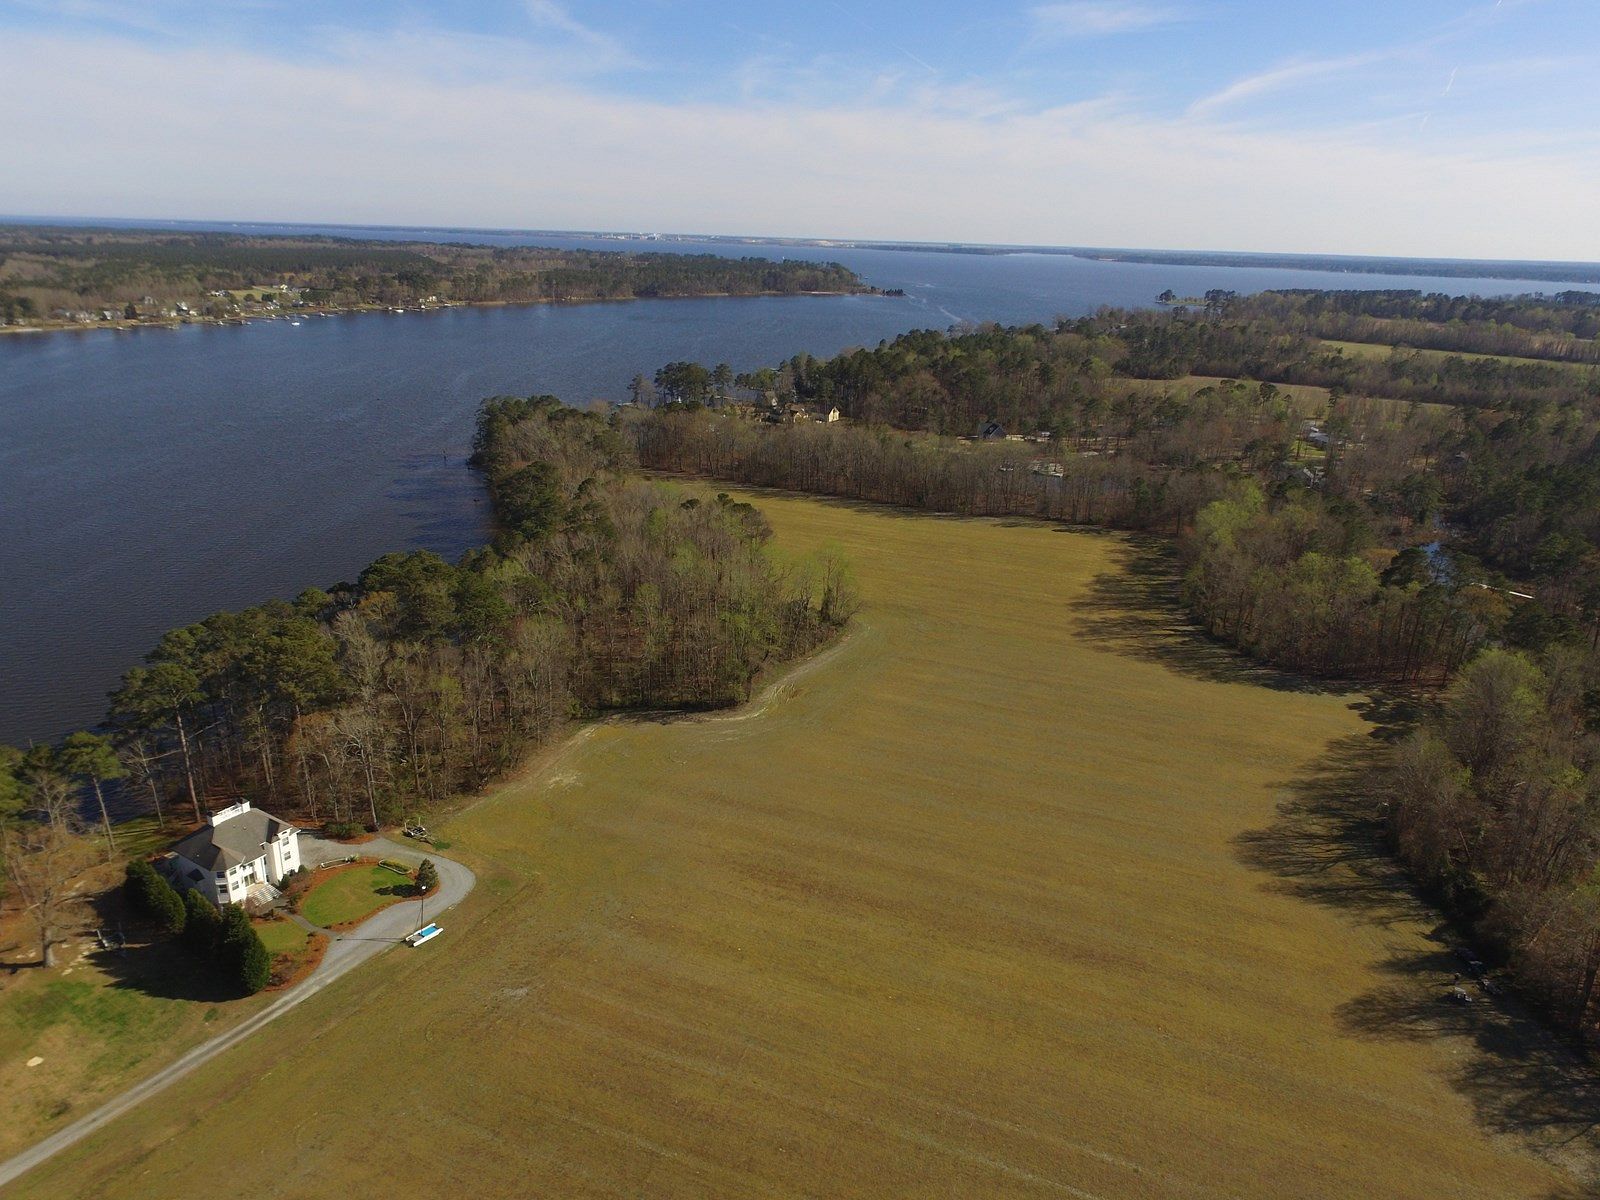 30 Acres of Recreational Land & Farm for Sale in Bath, North Carolina